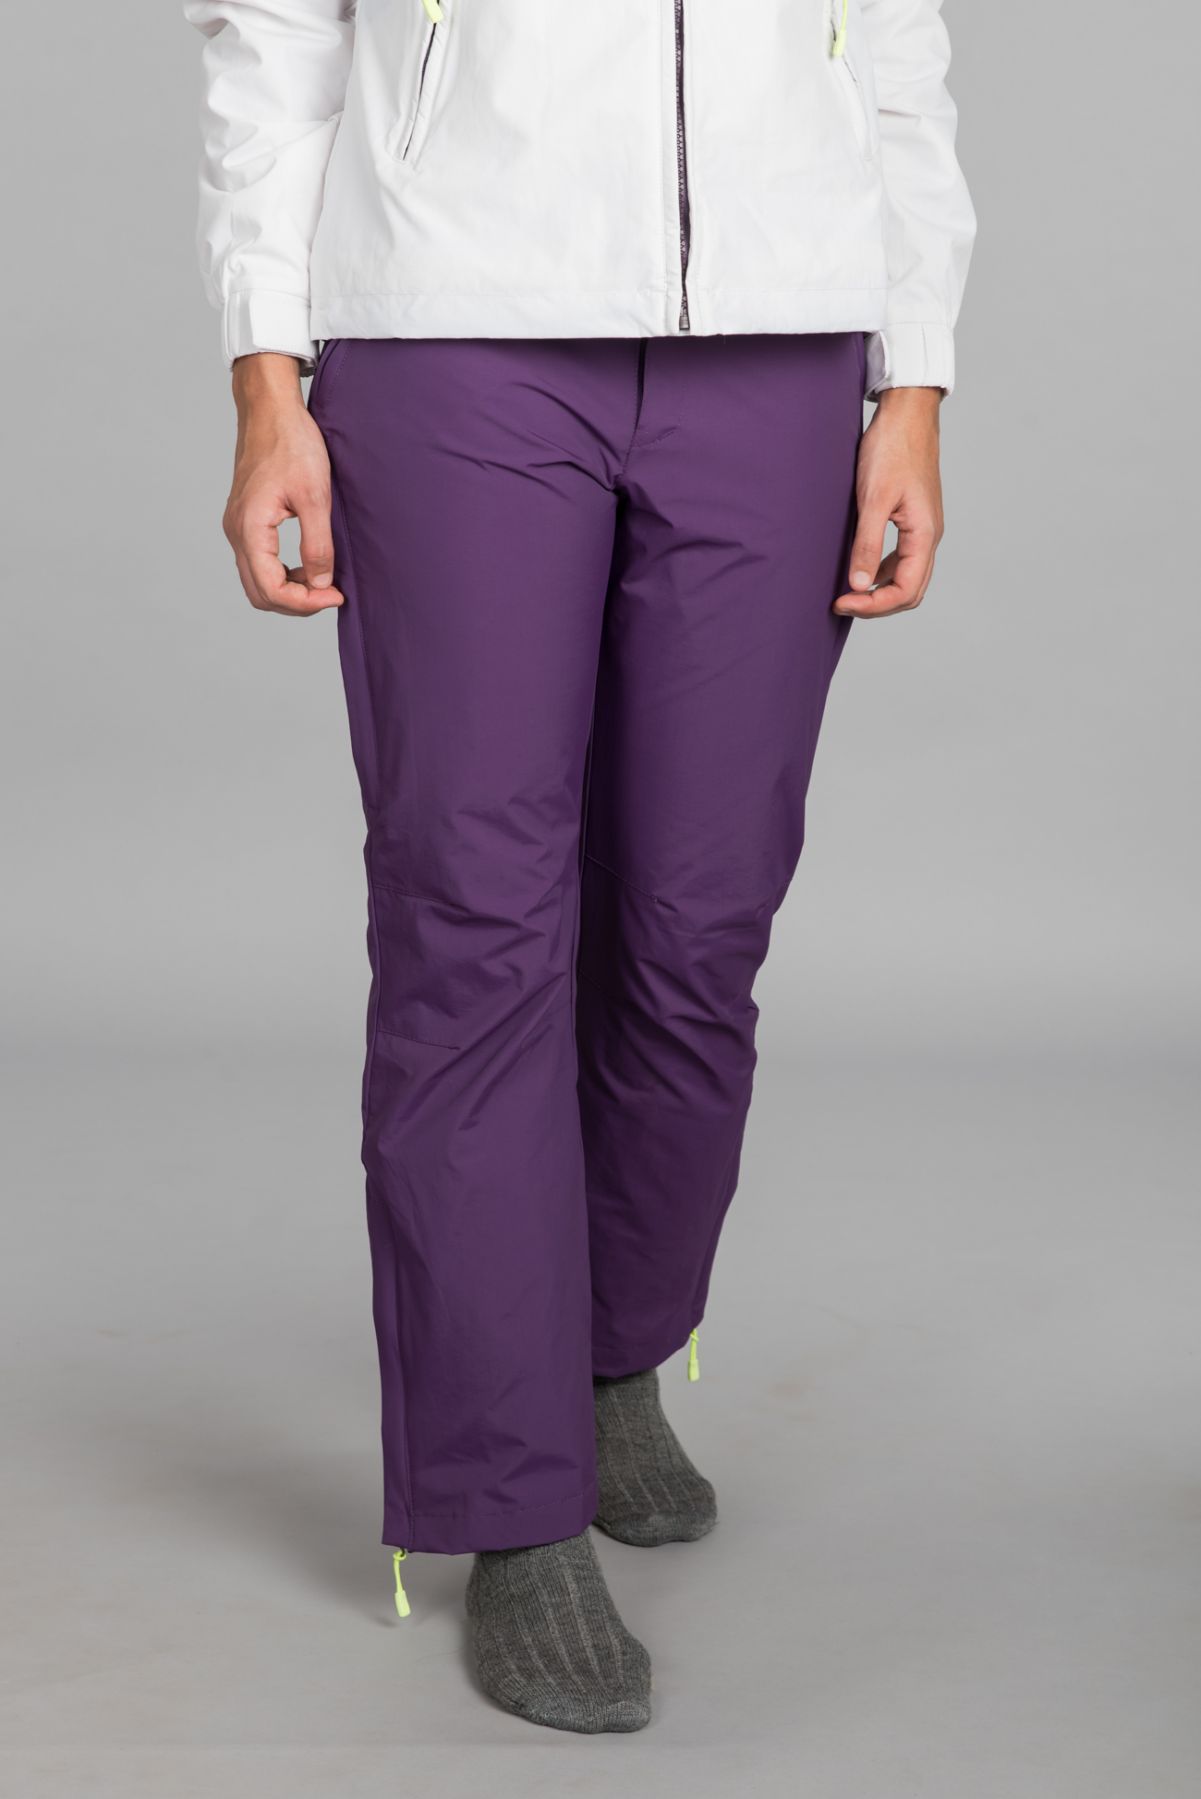 Skechers Go Walk Pant II | Dark Purple Pant For Women | India